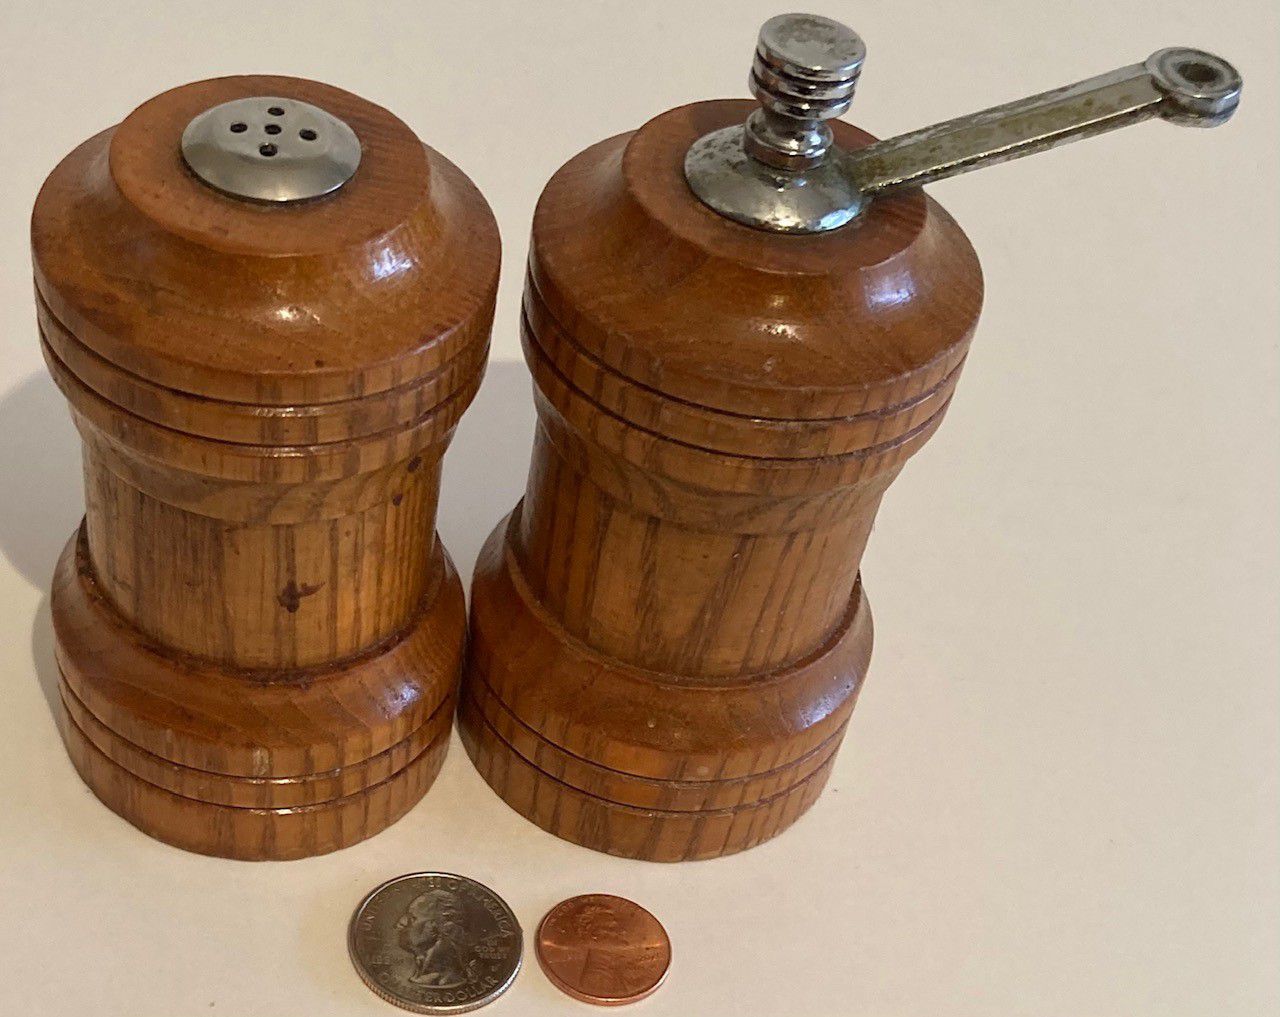 Vintage Set of Wooden Salt & Pepper Shakers, Shaker Set, Made in USA, Quality, Olde Thompson, Kitchen Decor, Table Display, Shelf Display